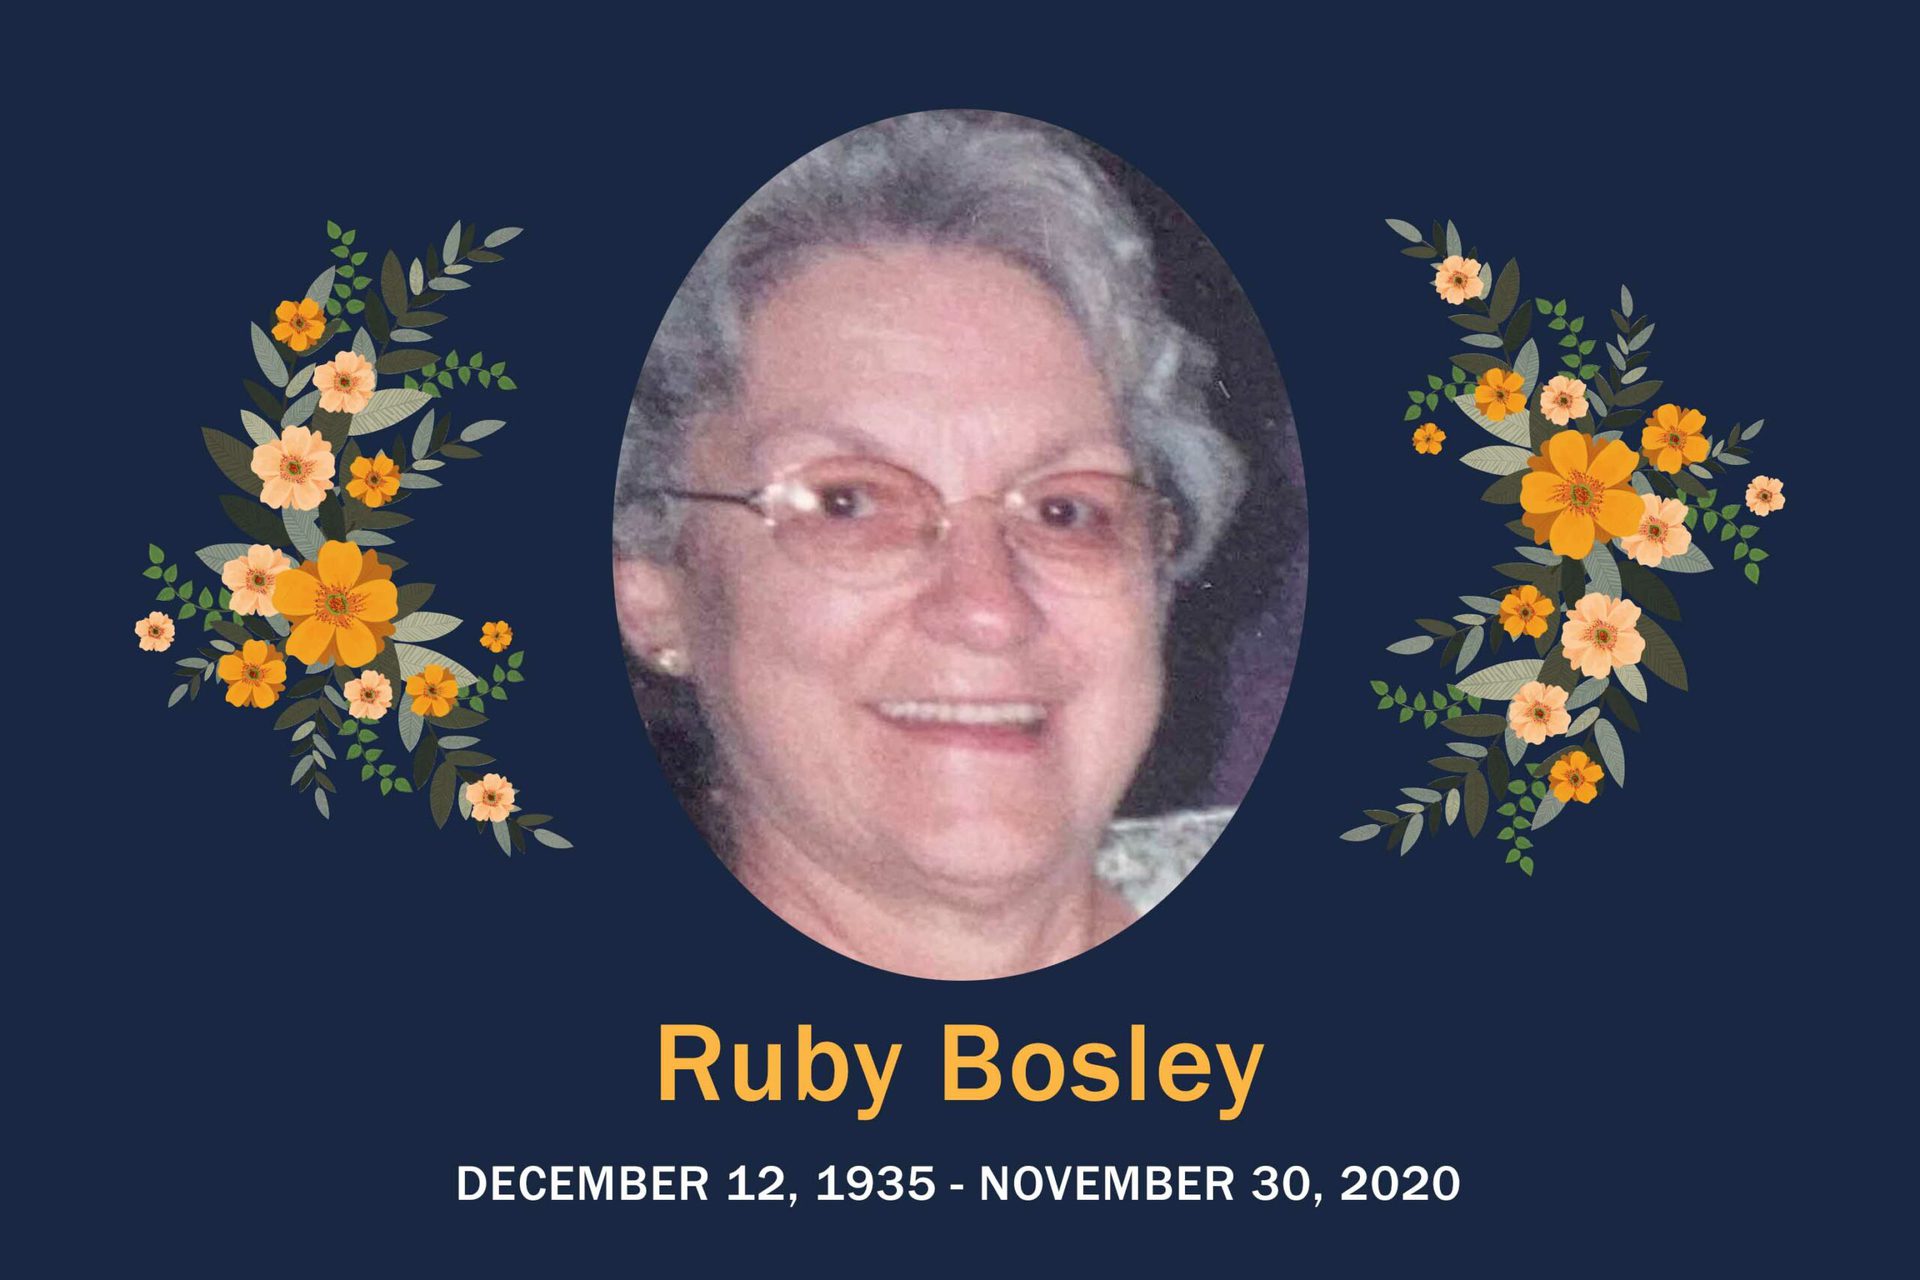 Obituary Ruby Bosley